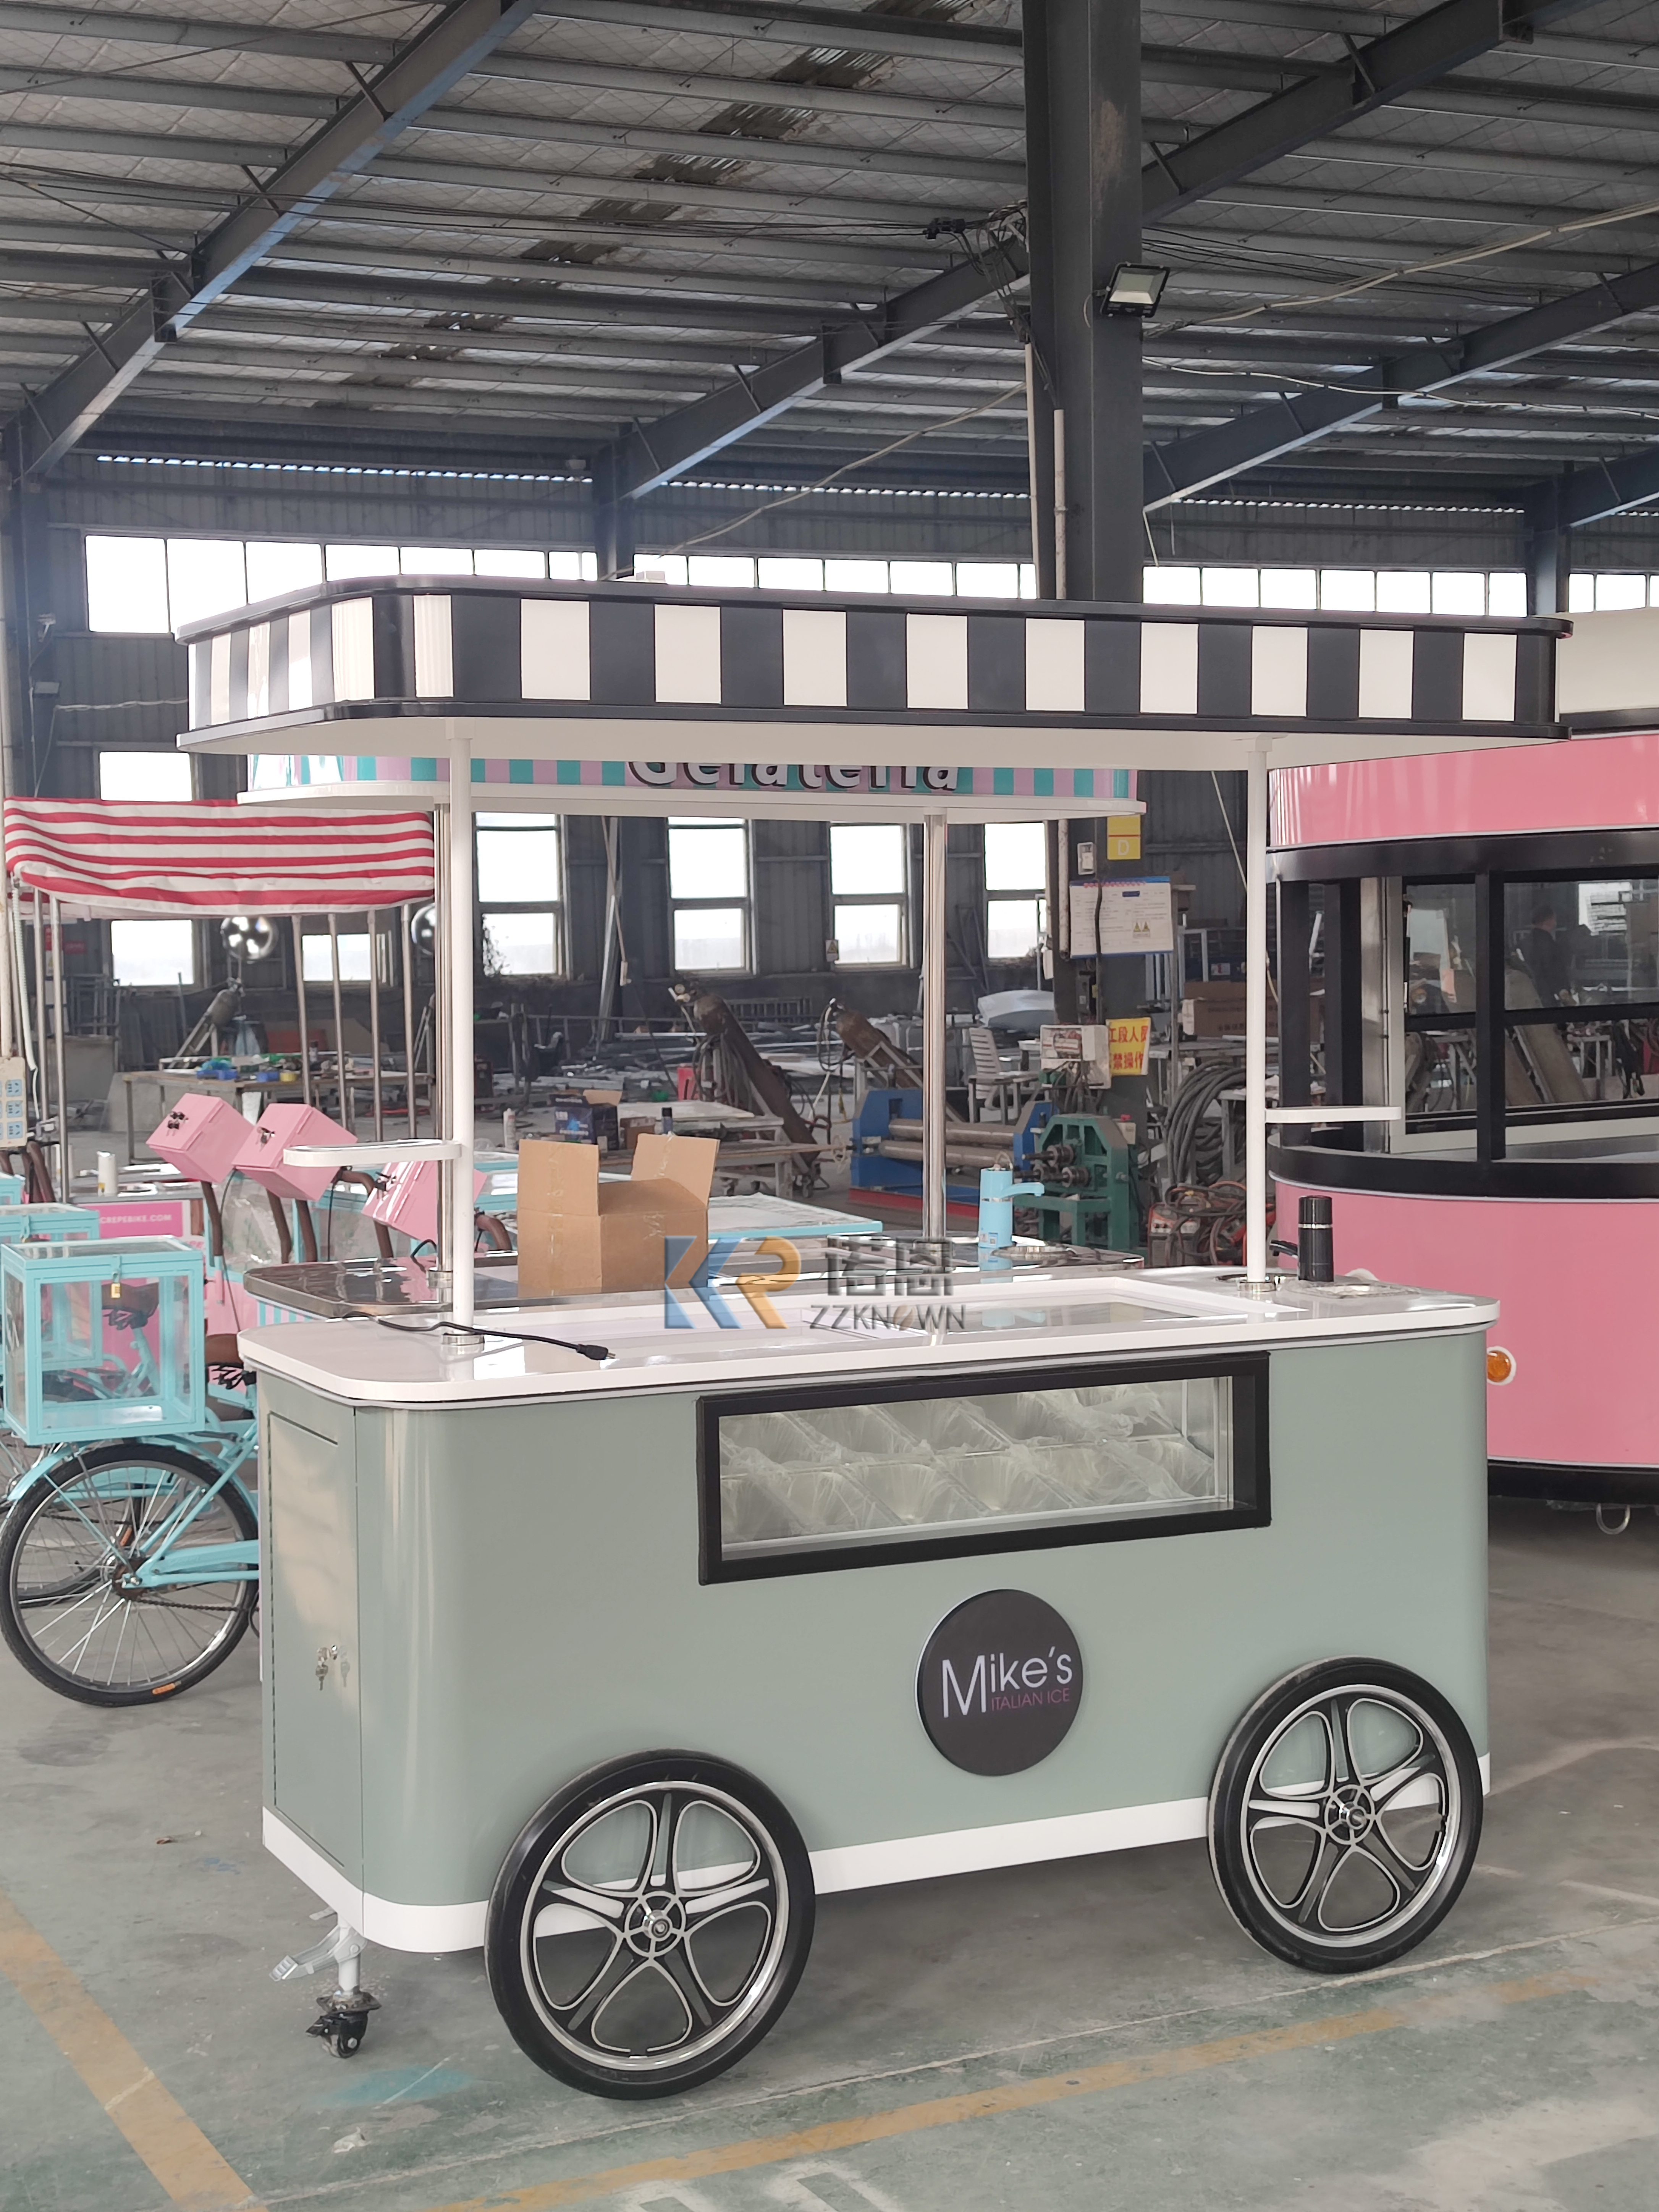 Mobile Coffee Ice Cream Cart Street Food Cart Customized Design Gelato Display Freezer Hand Push Cart